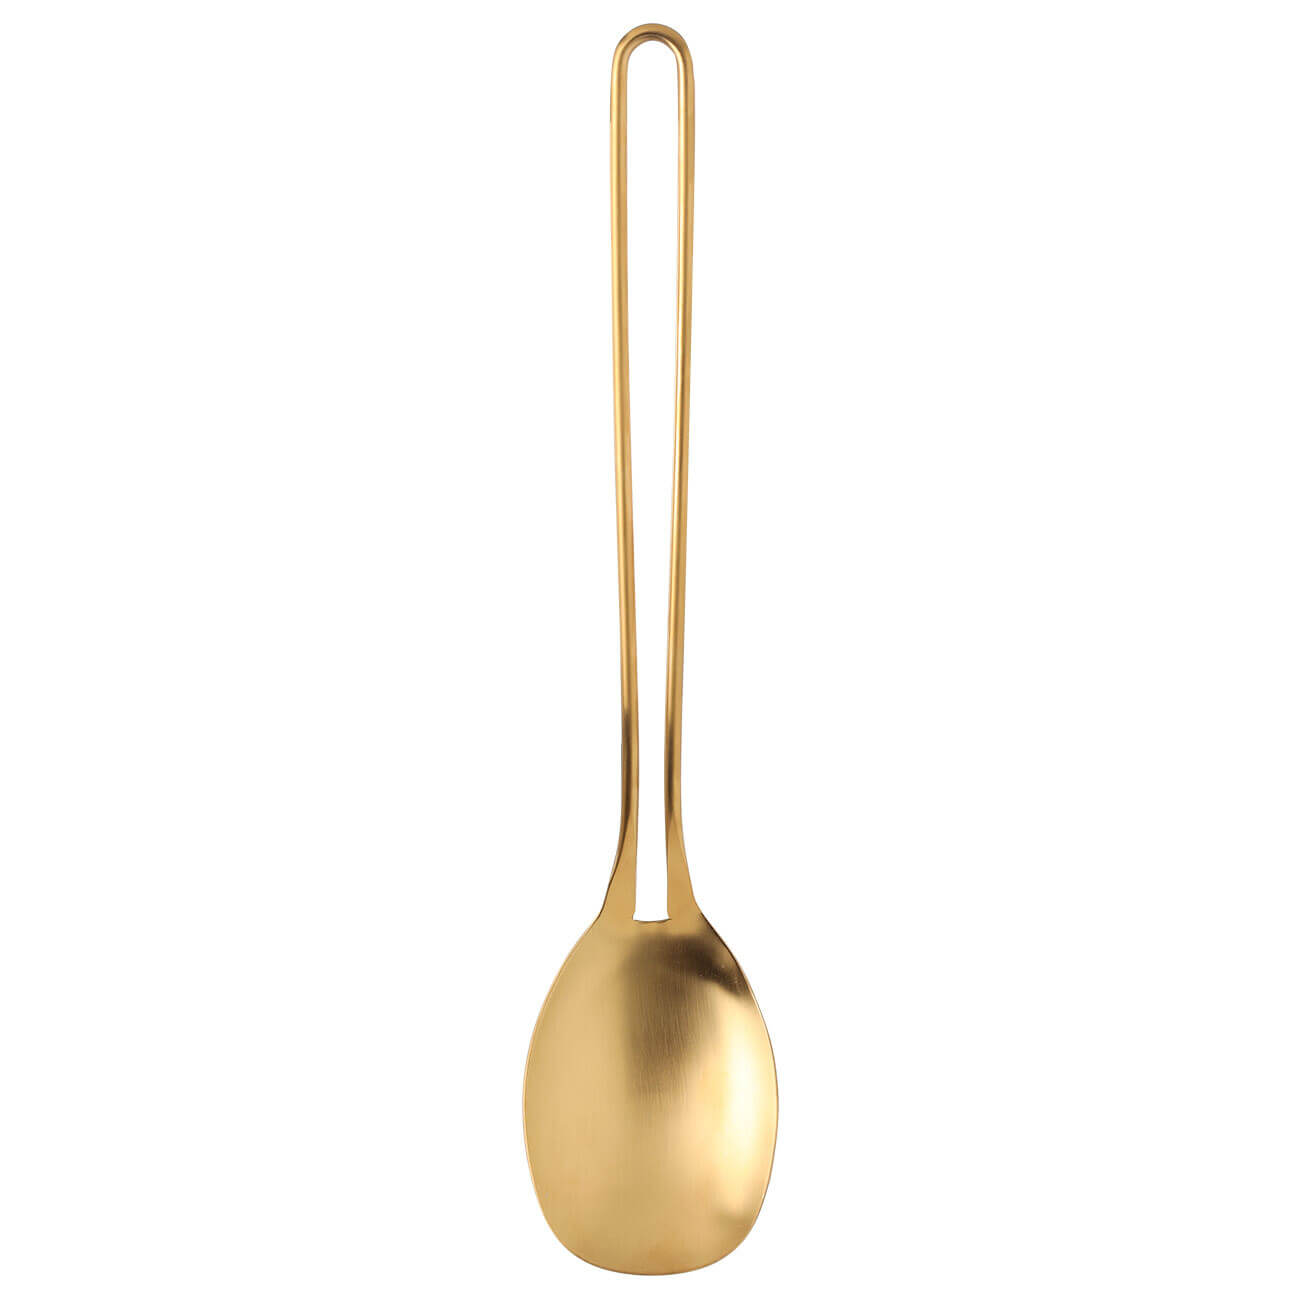 Serving spoon, 37 cm, steel, golden, Device gold изображение № 1